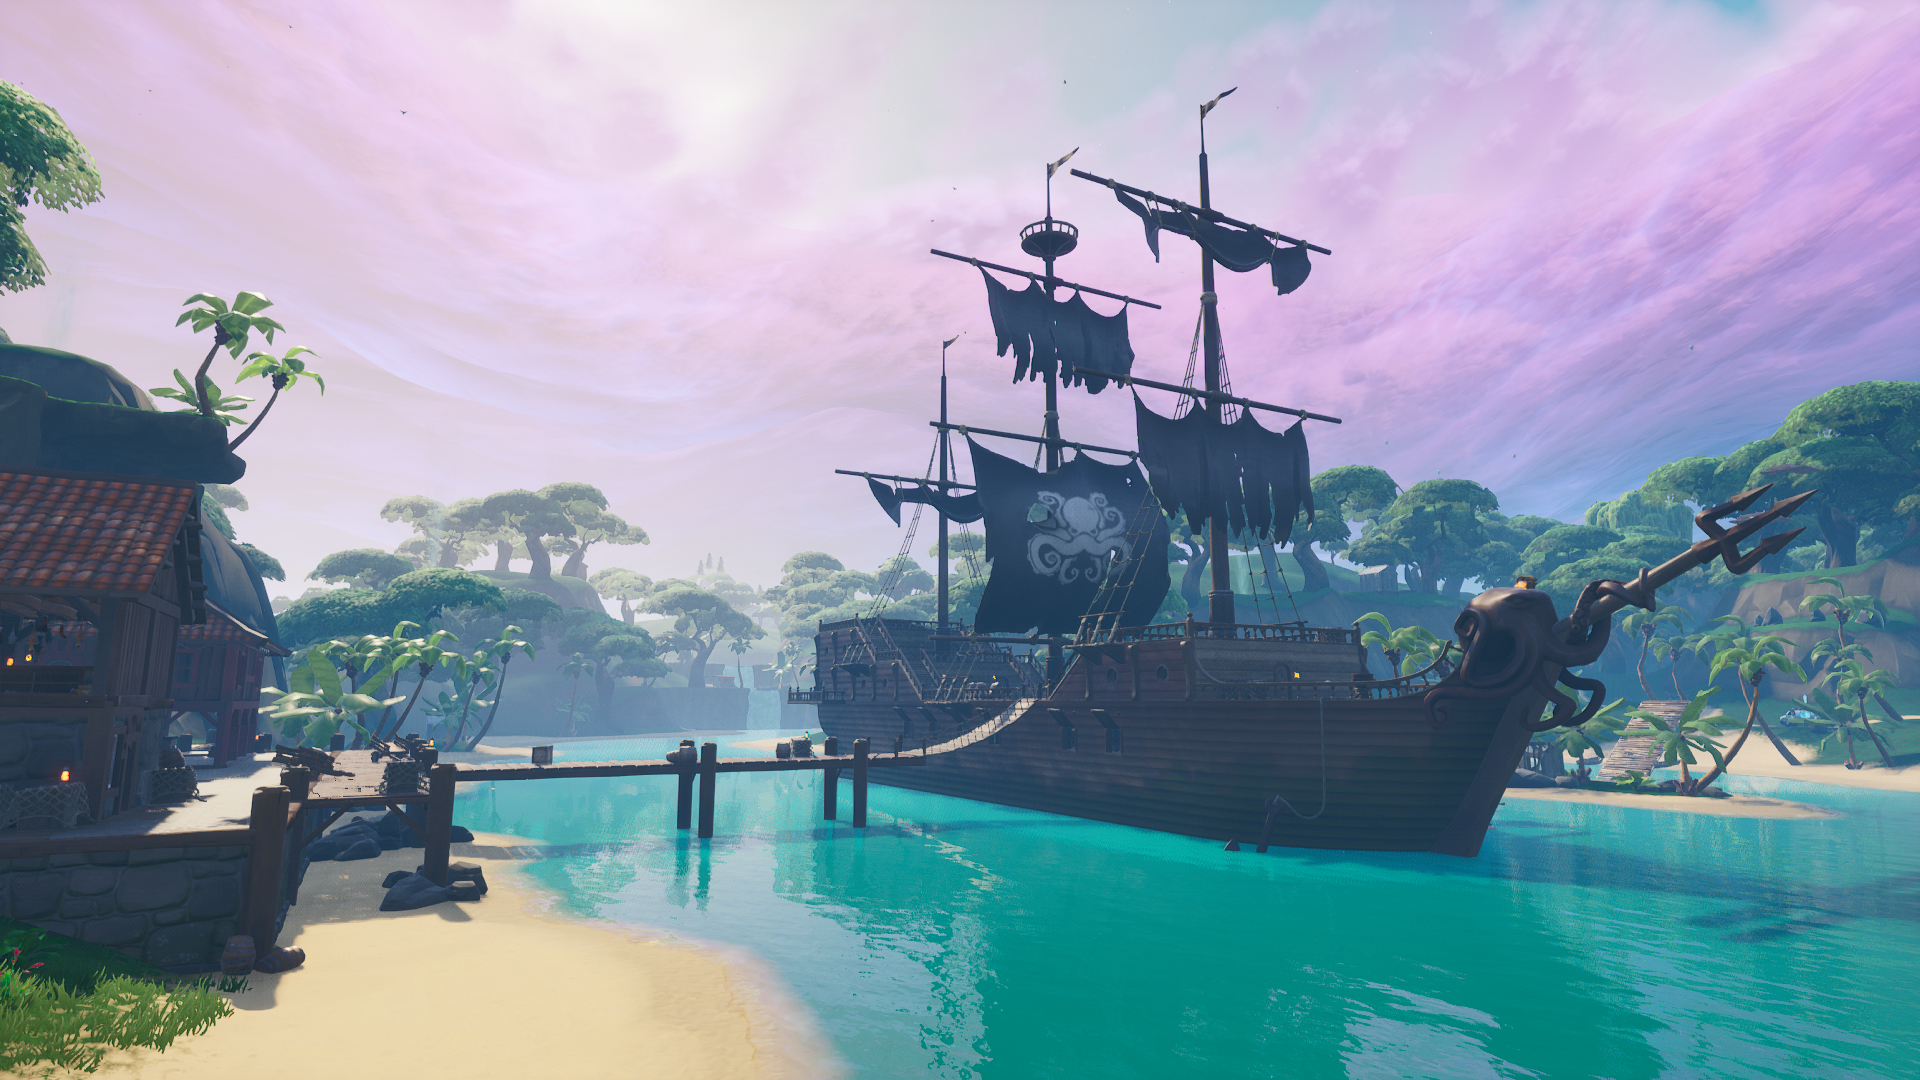 Pirate ship in Lazy Lagoon in Fortnite Season 8